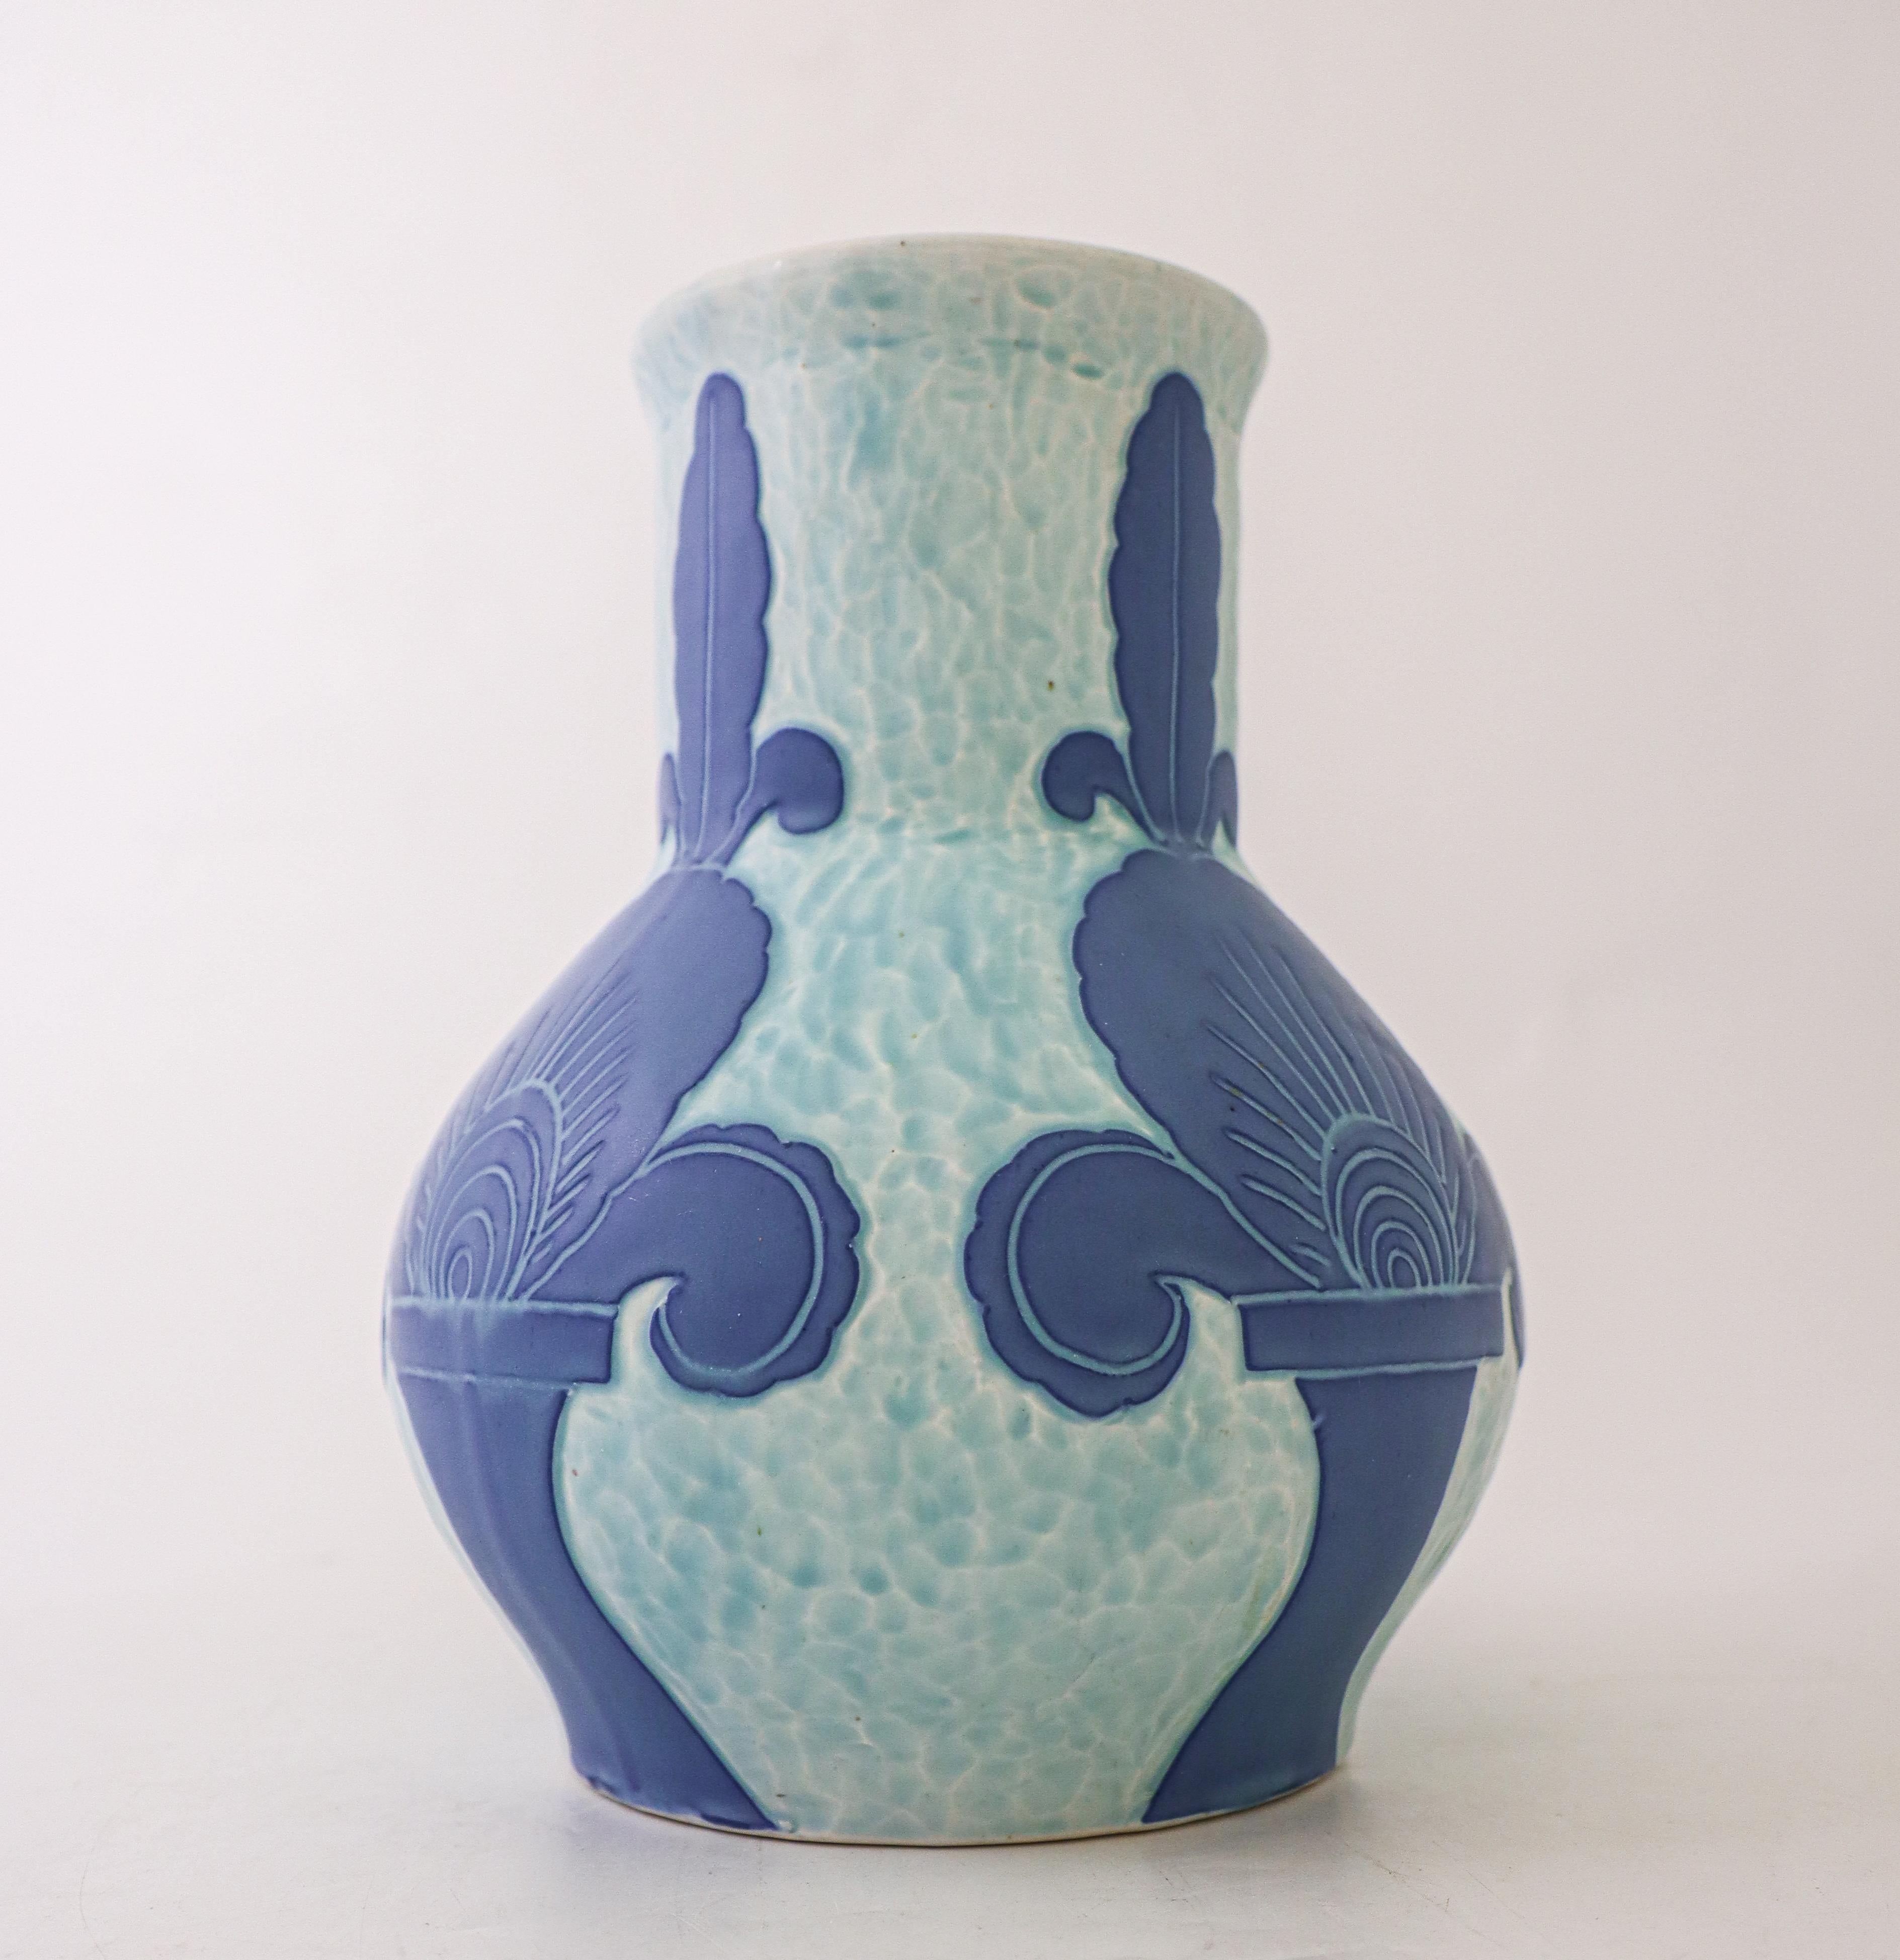 A ceramic vase in lovely art nouveau by Josef Ekberg at Gustavsberg in 1924. The vase is 21.5 cm (8.6